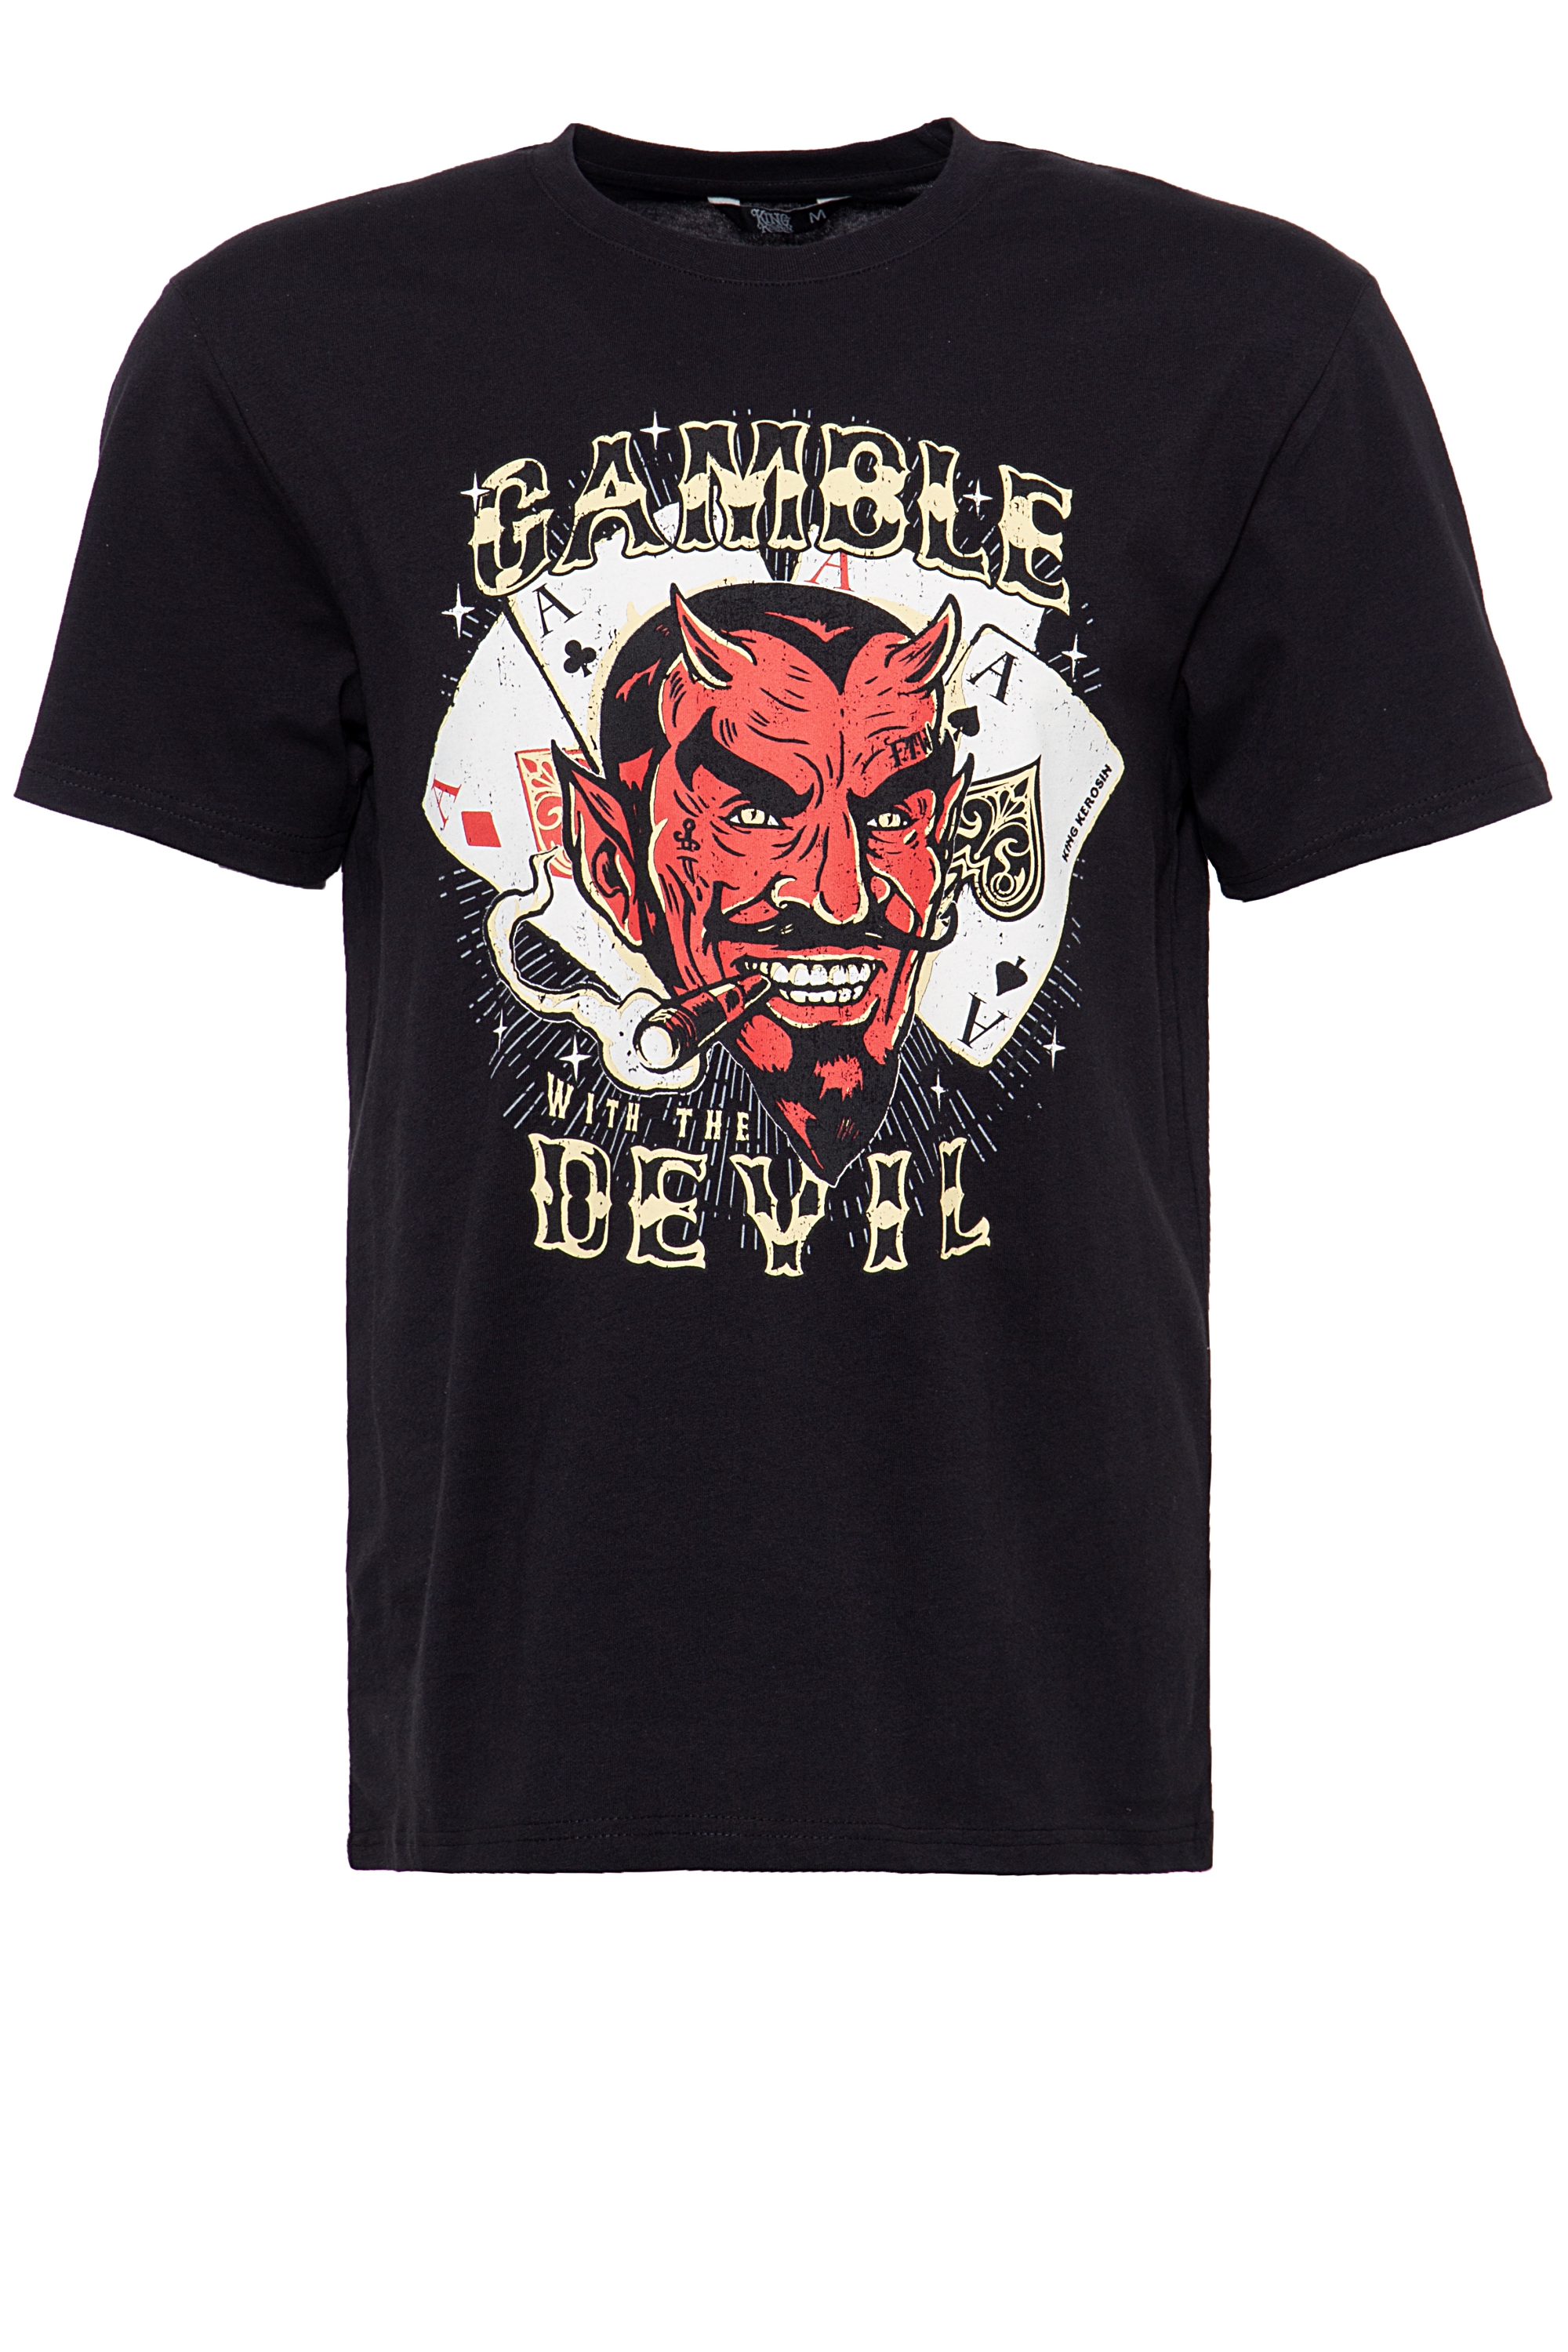 King Kerosin T-Shirt - Gamble Devil S